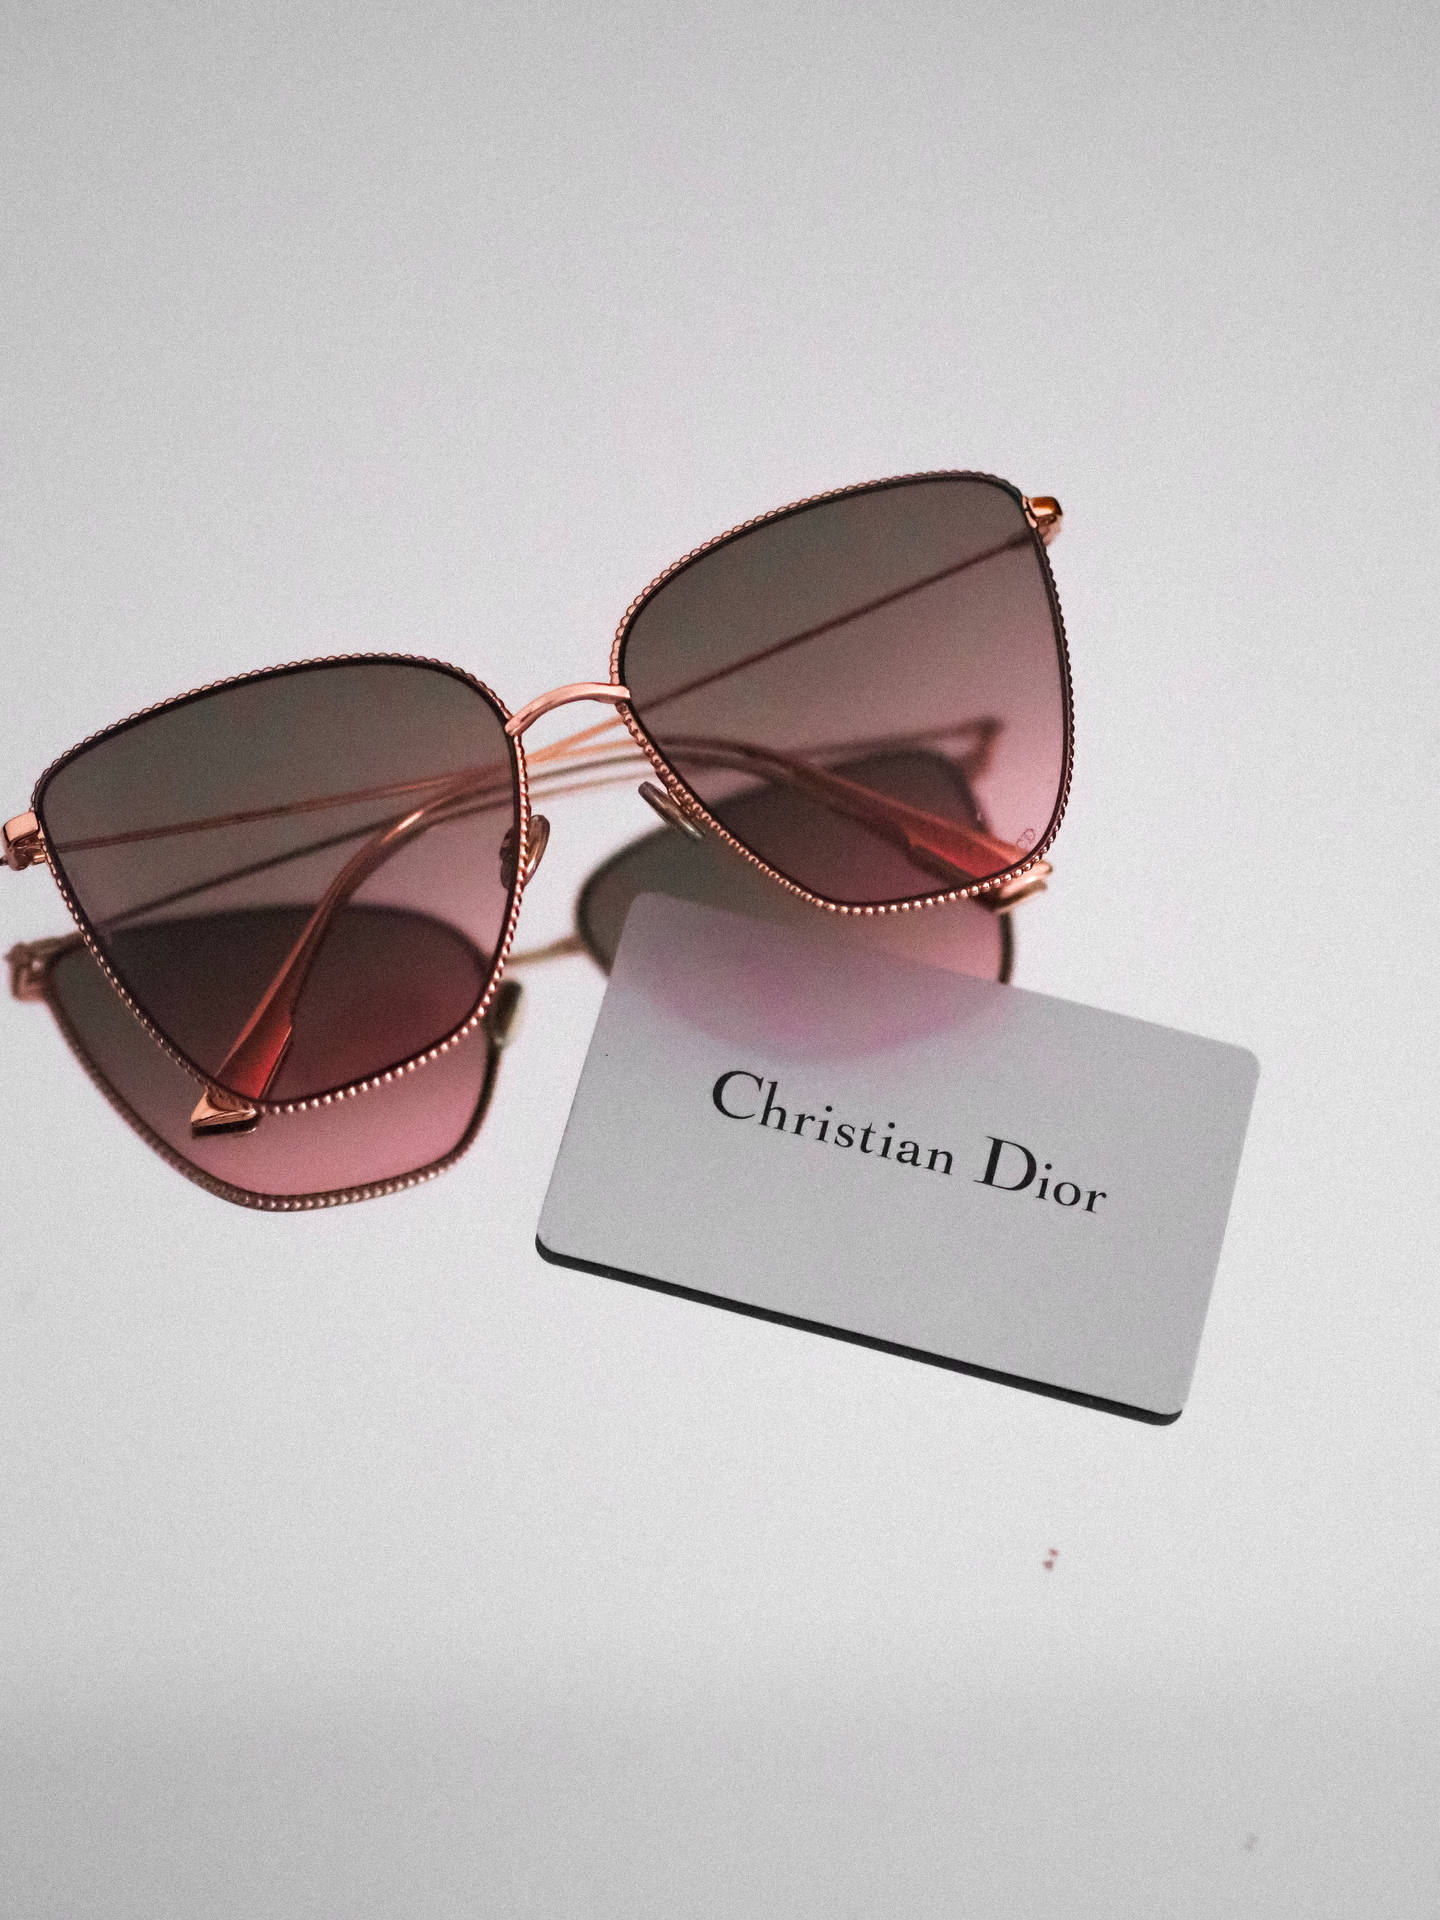 Christian Dior Sunglasses Background